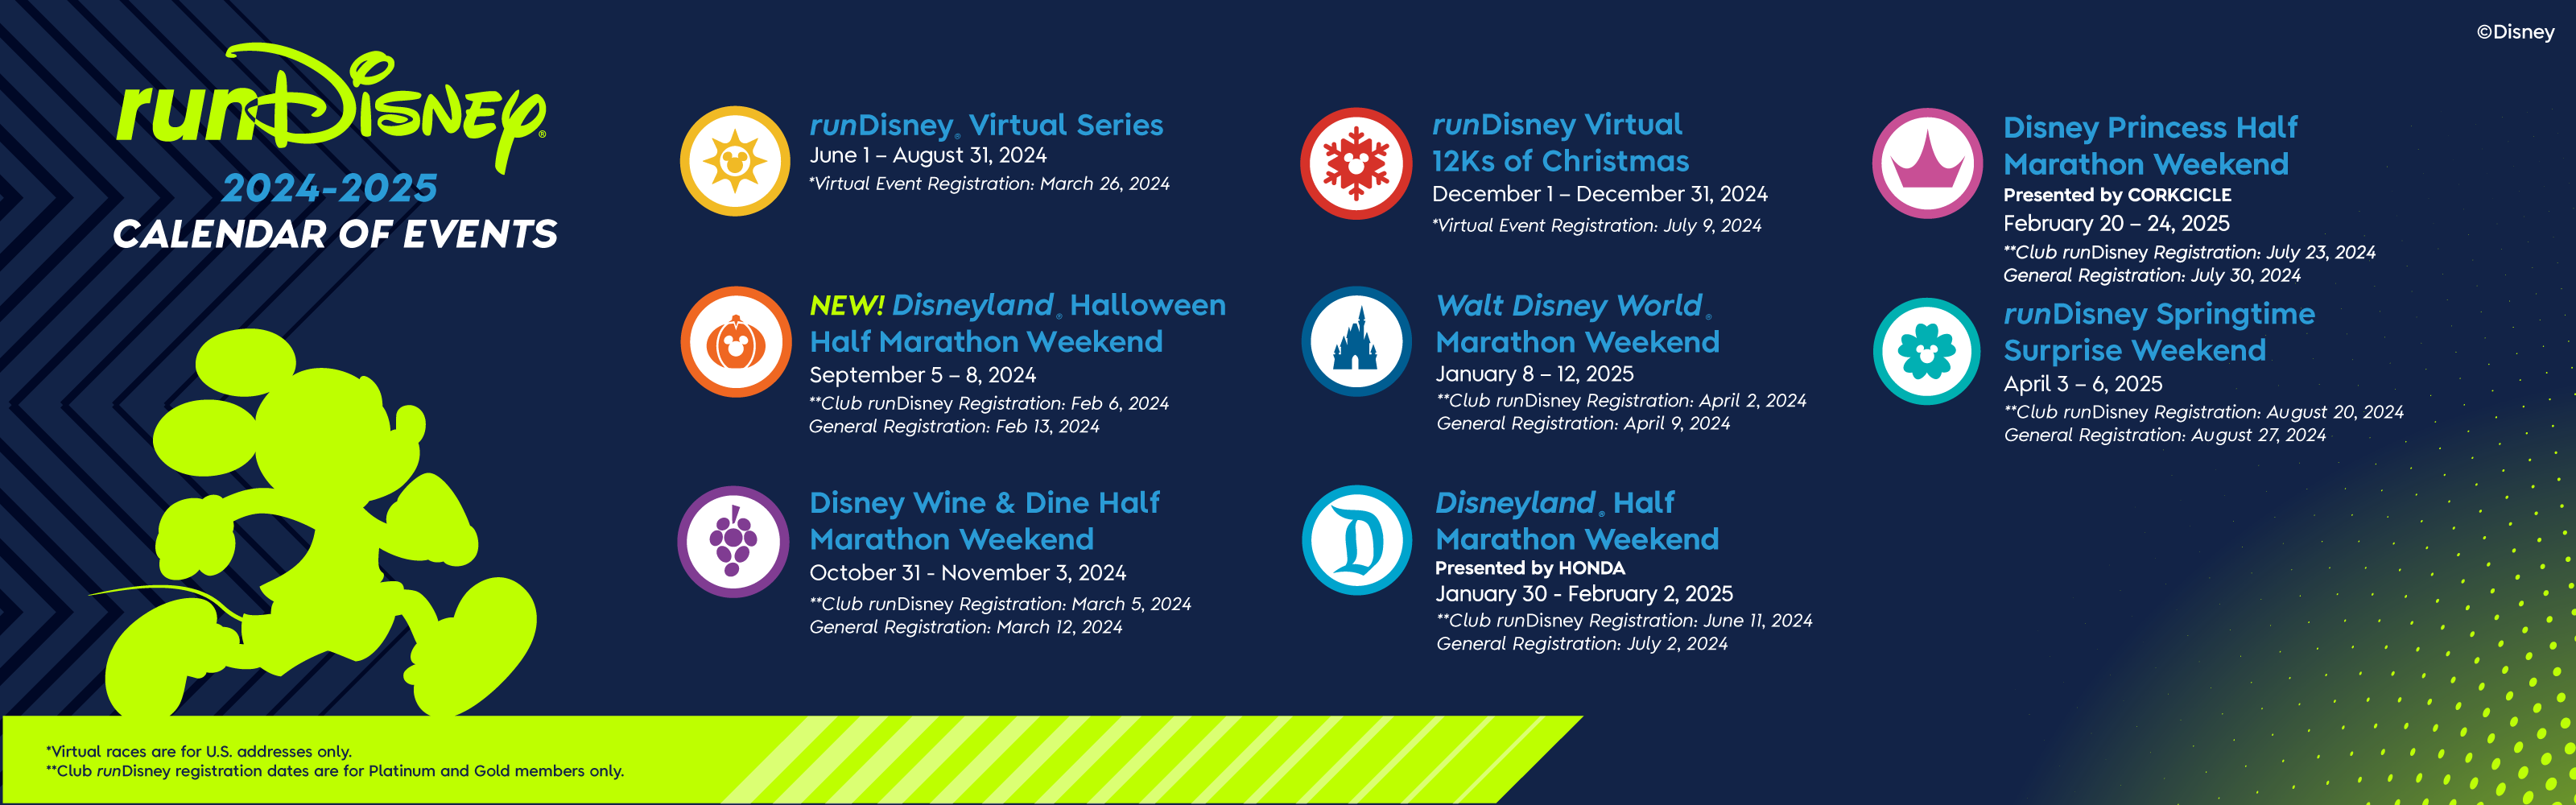 Disneyland Food and Wine Festival 2025 Events